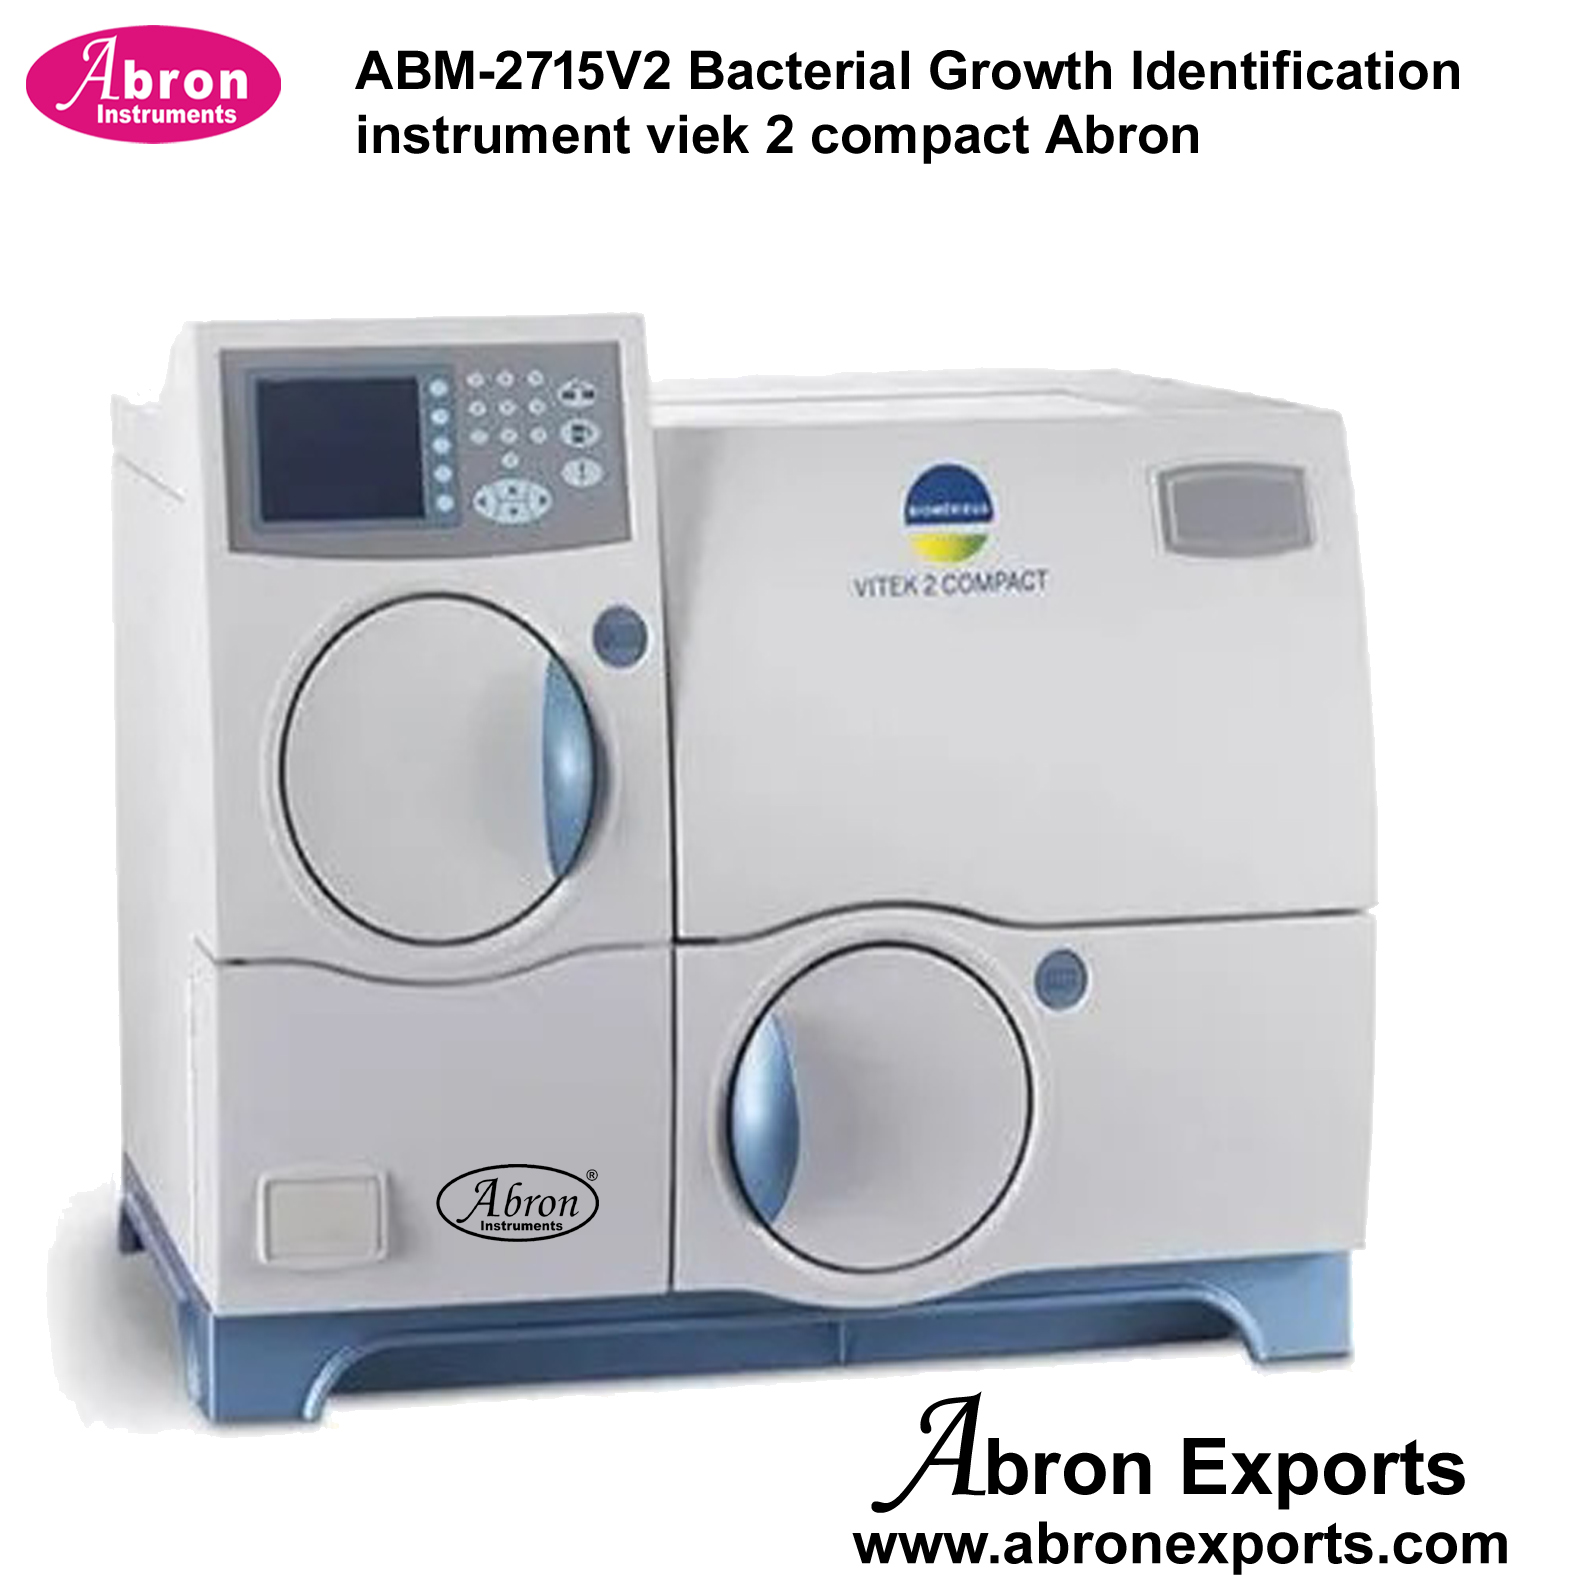 VITEK 2 Compact Bacterial Growth Identification instrument viek 2 compact Abron ABM-2715V2 